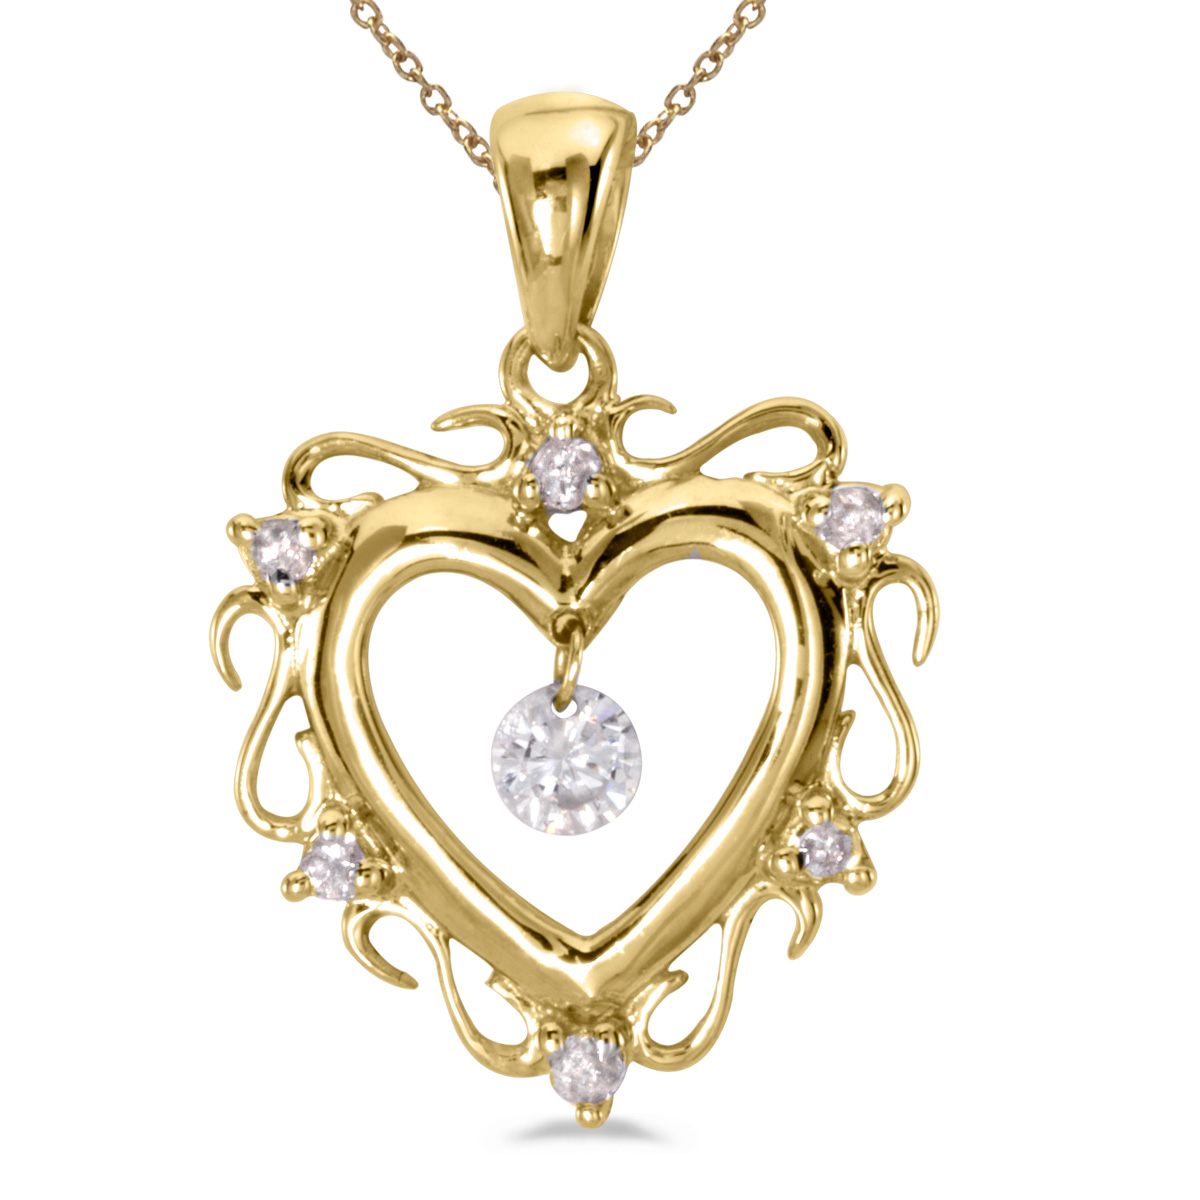 14k gold Dashinng Diamonds pendant with 0.13 total ct diamonds. The center dangling diamond dance...